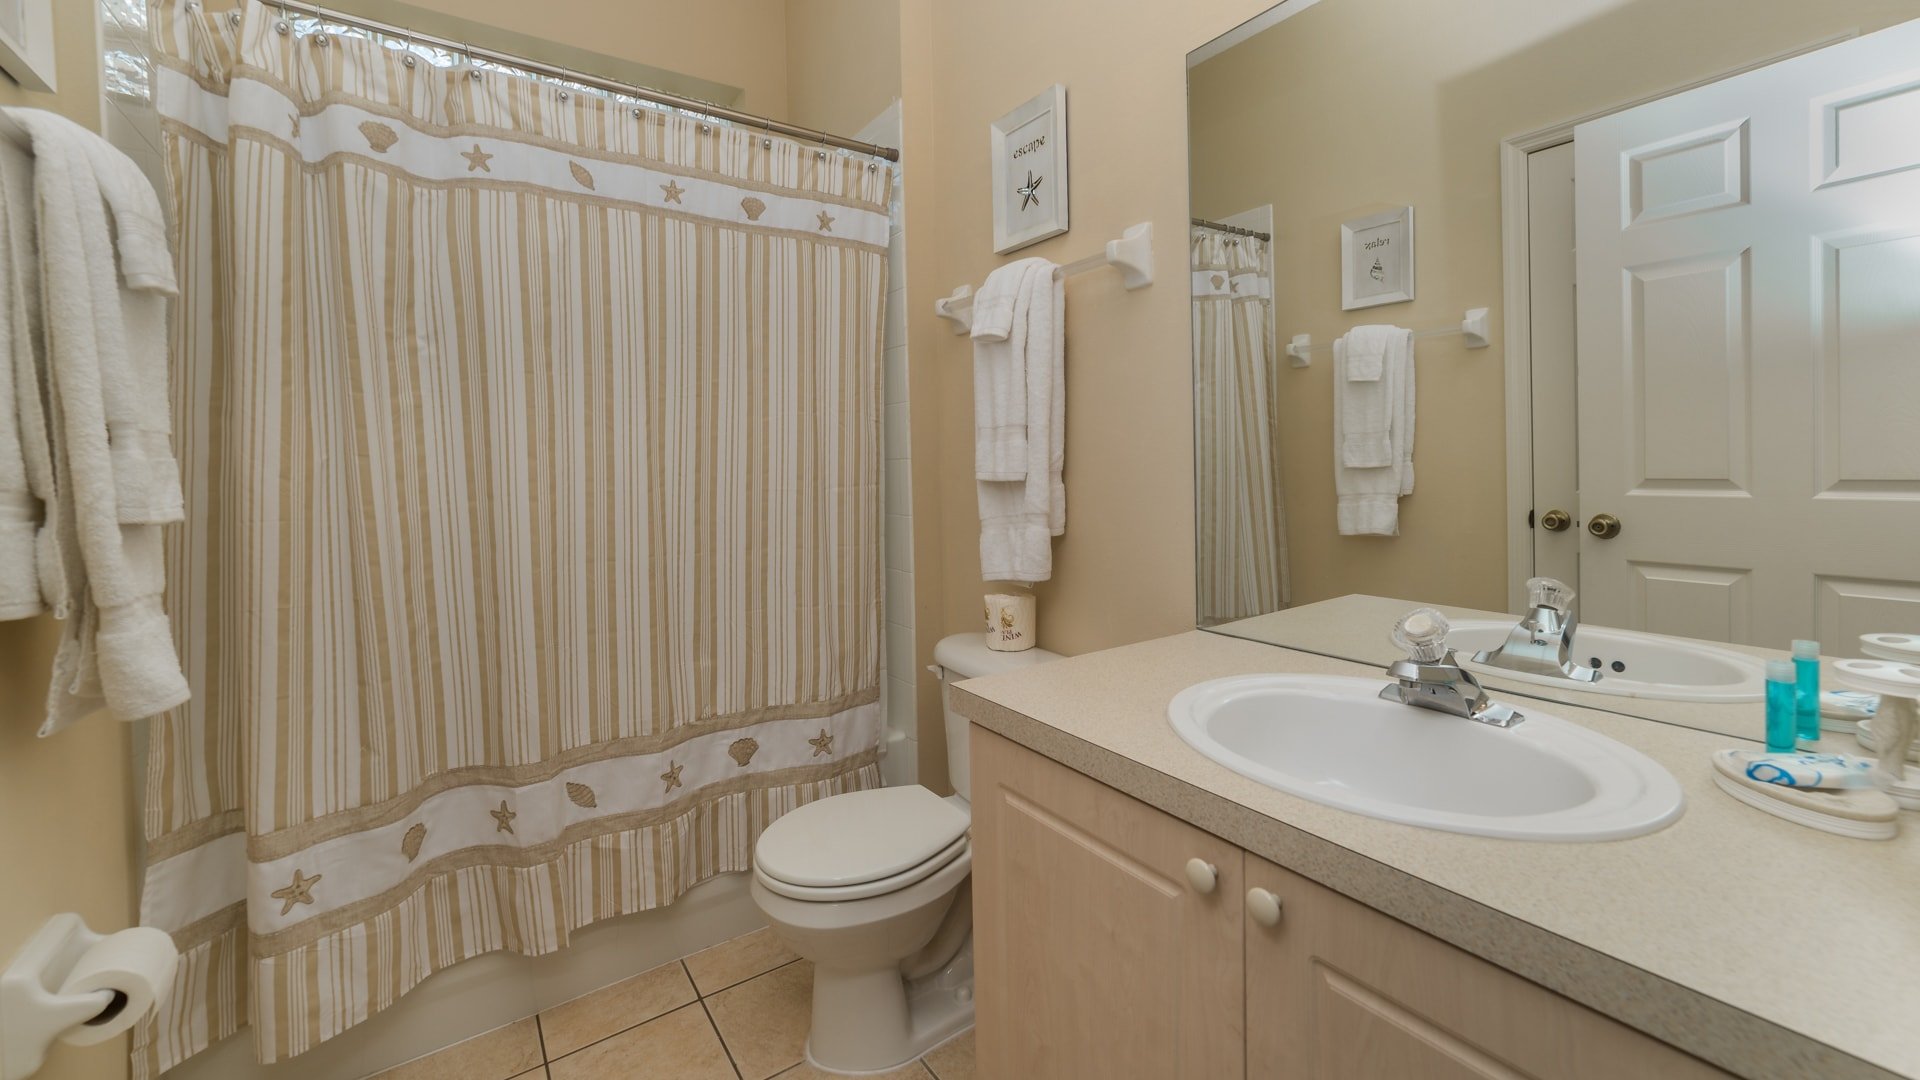 Hall Bathroom 3
Tub/Shower Combo